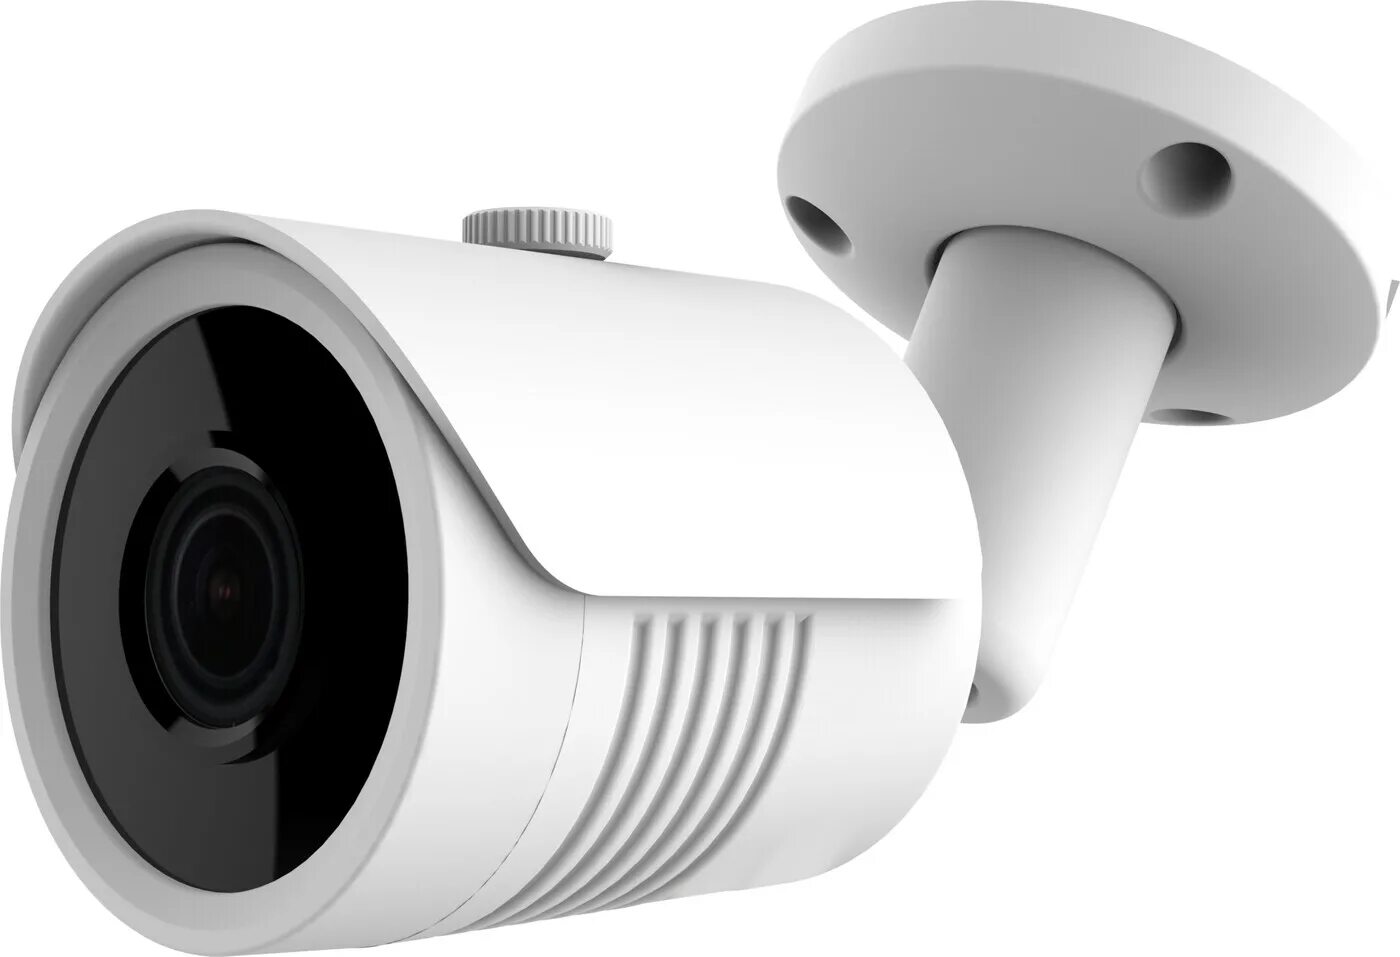 Poe sd. Px-AHD-bh30-h20fsh уличная 4 в 1 видеокамера, 1080p, f=2.8мм. Px-IP-bh30-gf20-p (BV) уличная IP видеокамера, 2.0МП, F=2.8мм, POE. EVC-bh30-f22-p (BV) уличная IP видеокамера, 2.0МП, F=3.6мм, POE. Px-IP-bh30-f23-p BV уличная IP видеокамера 2.0МП F 2.8мм POE.